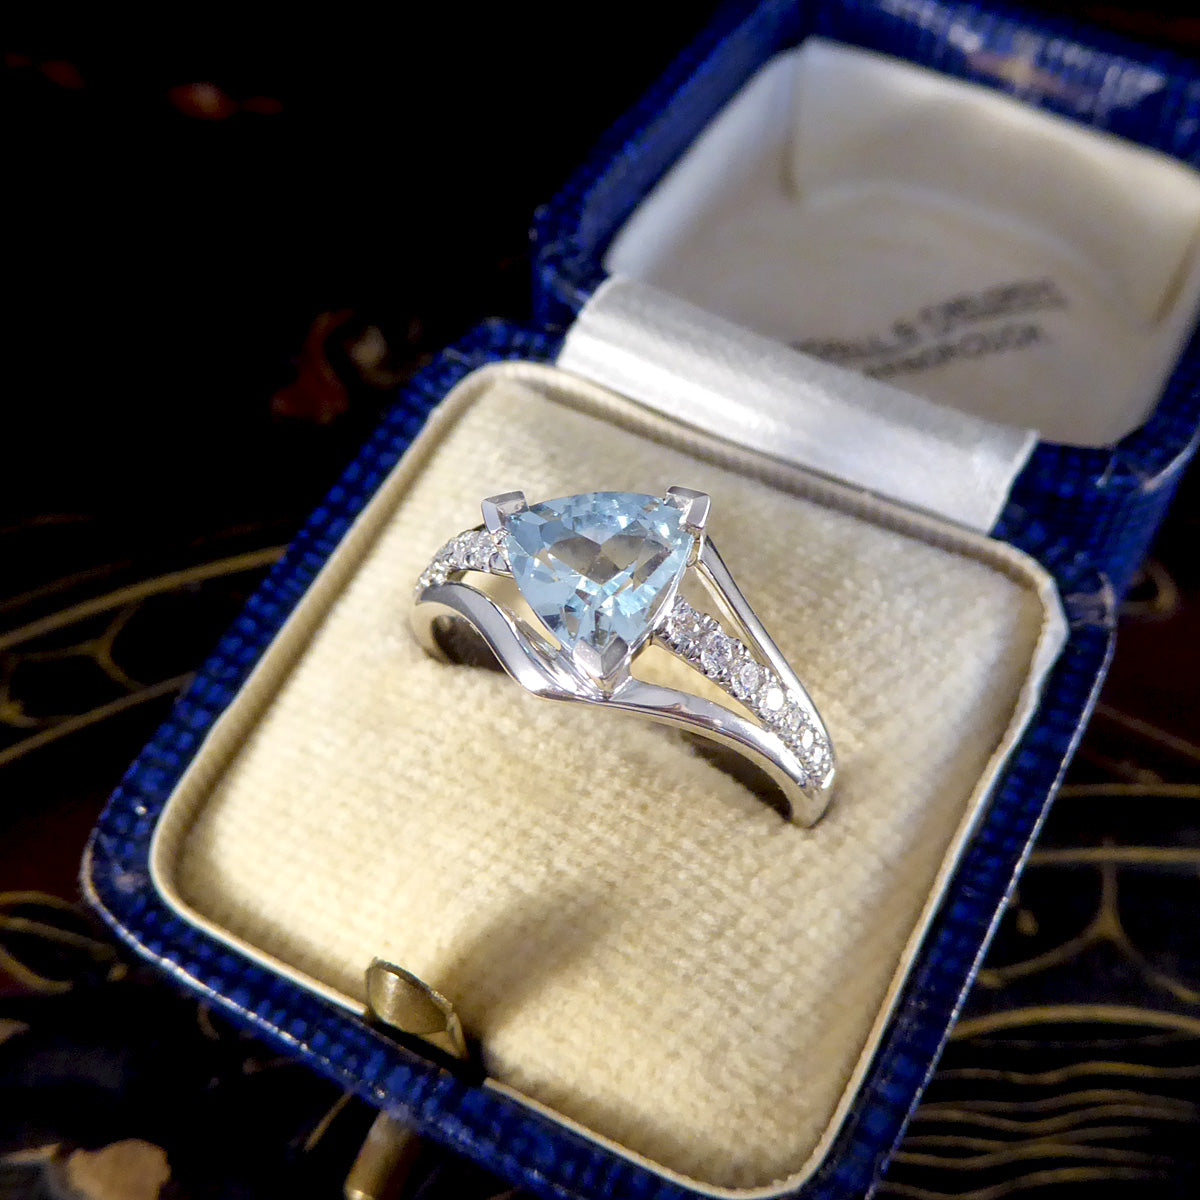 Aquamarine Trillion Cut and Diamond Set Three Strand Ring in 18ct White Gold